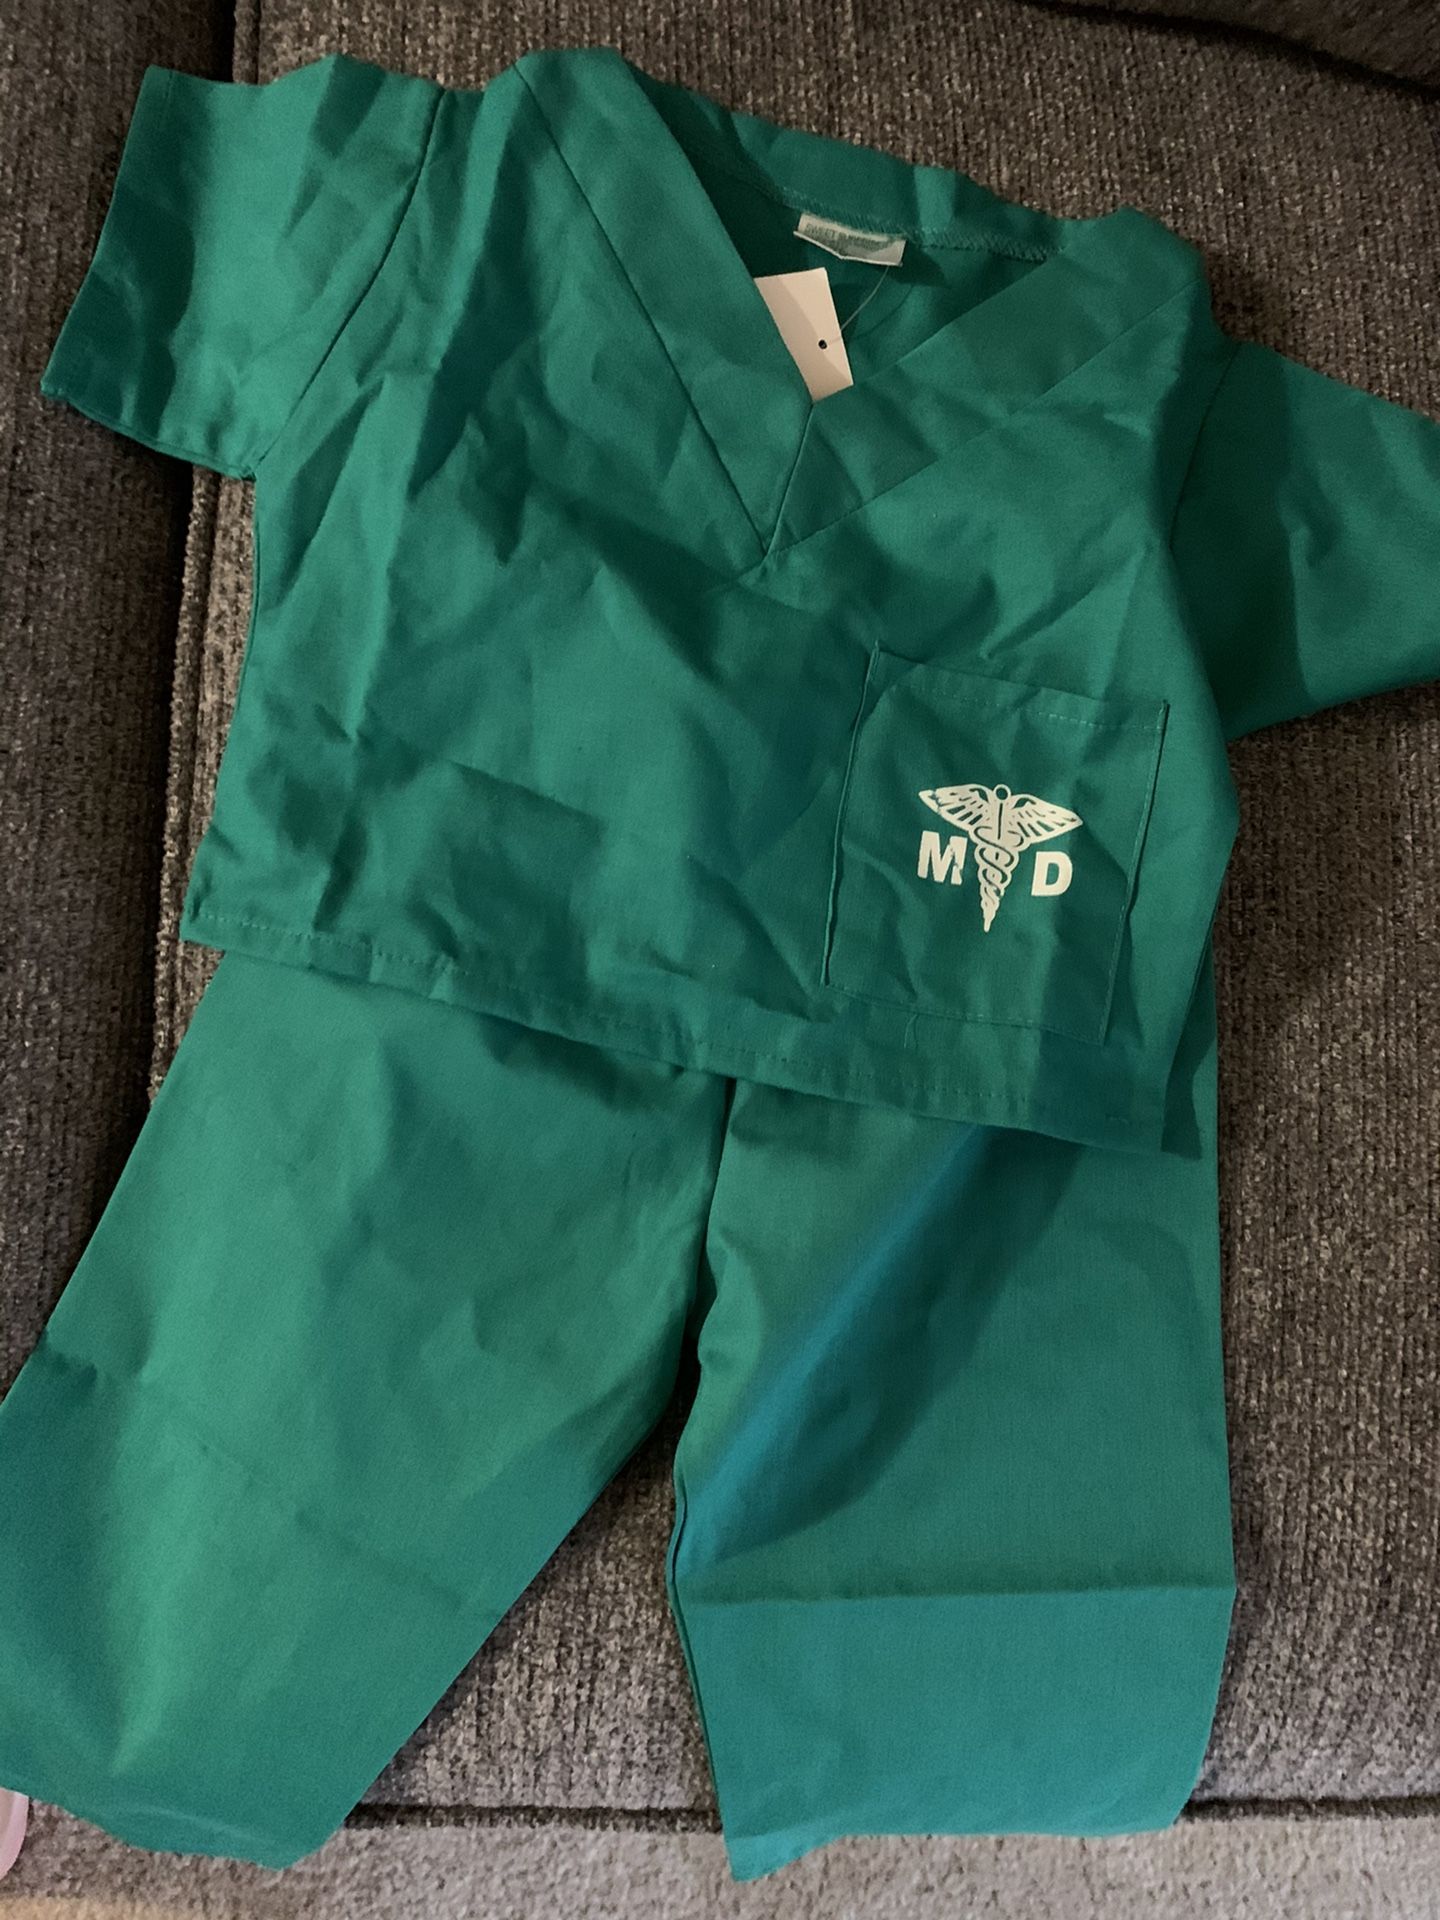 Baby doctor costume/scrubs